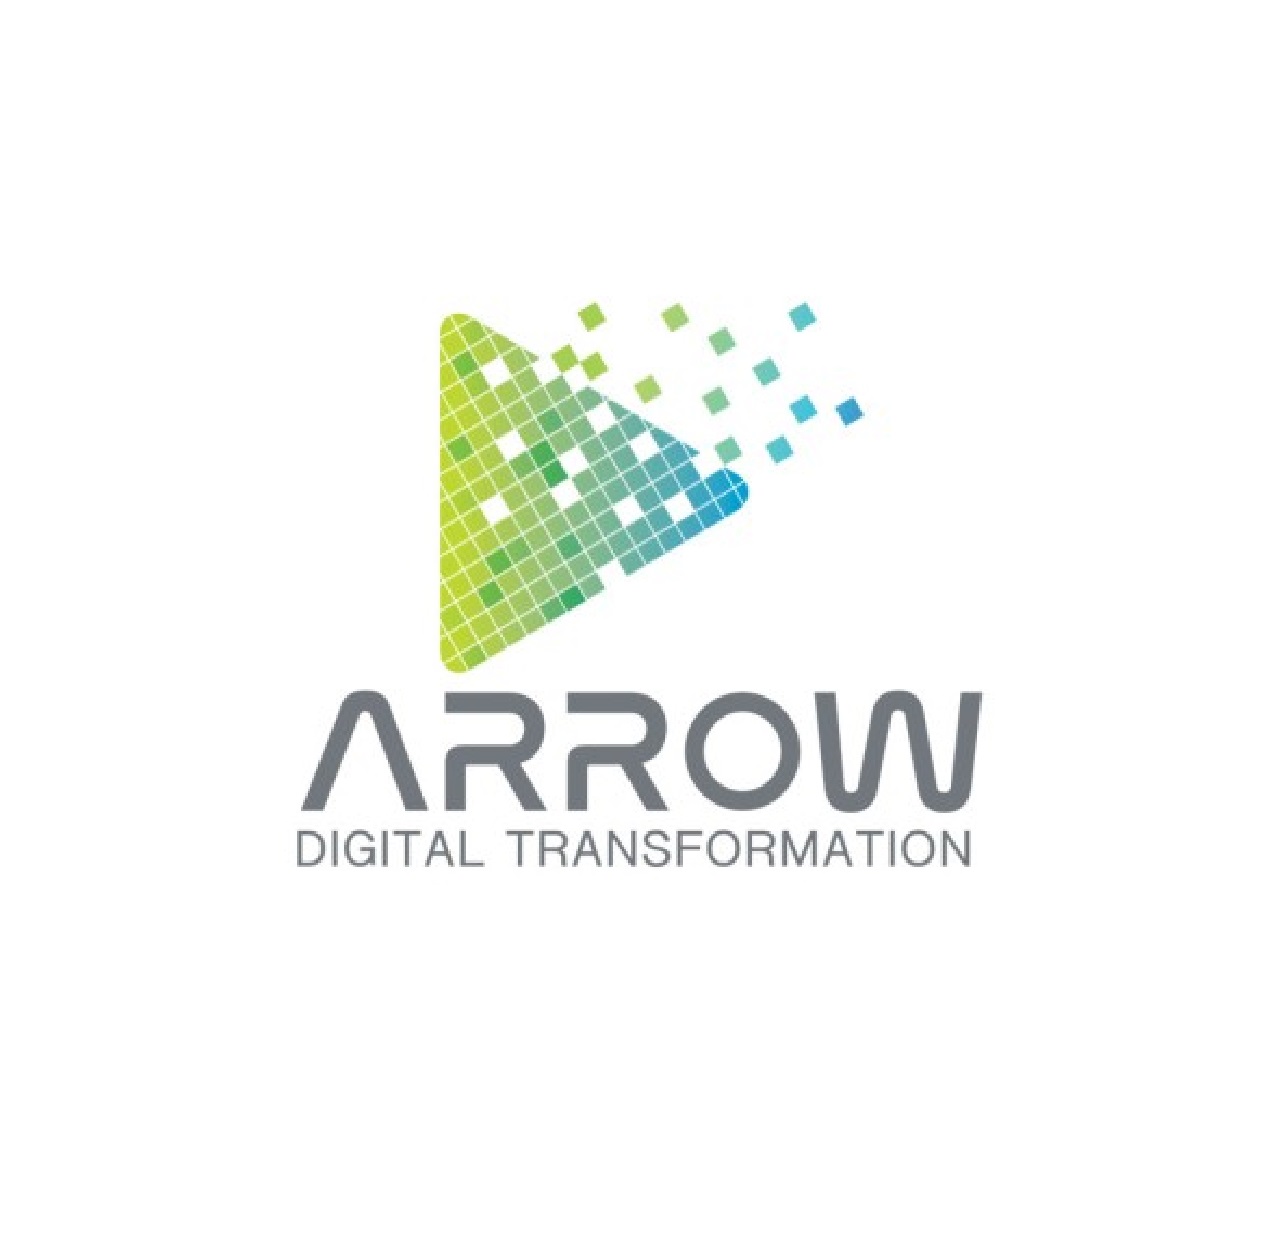 Arrow Digital Transformation Company